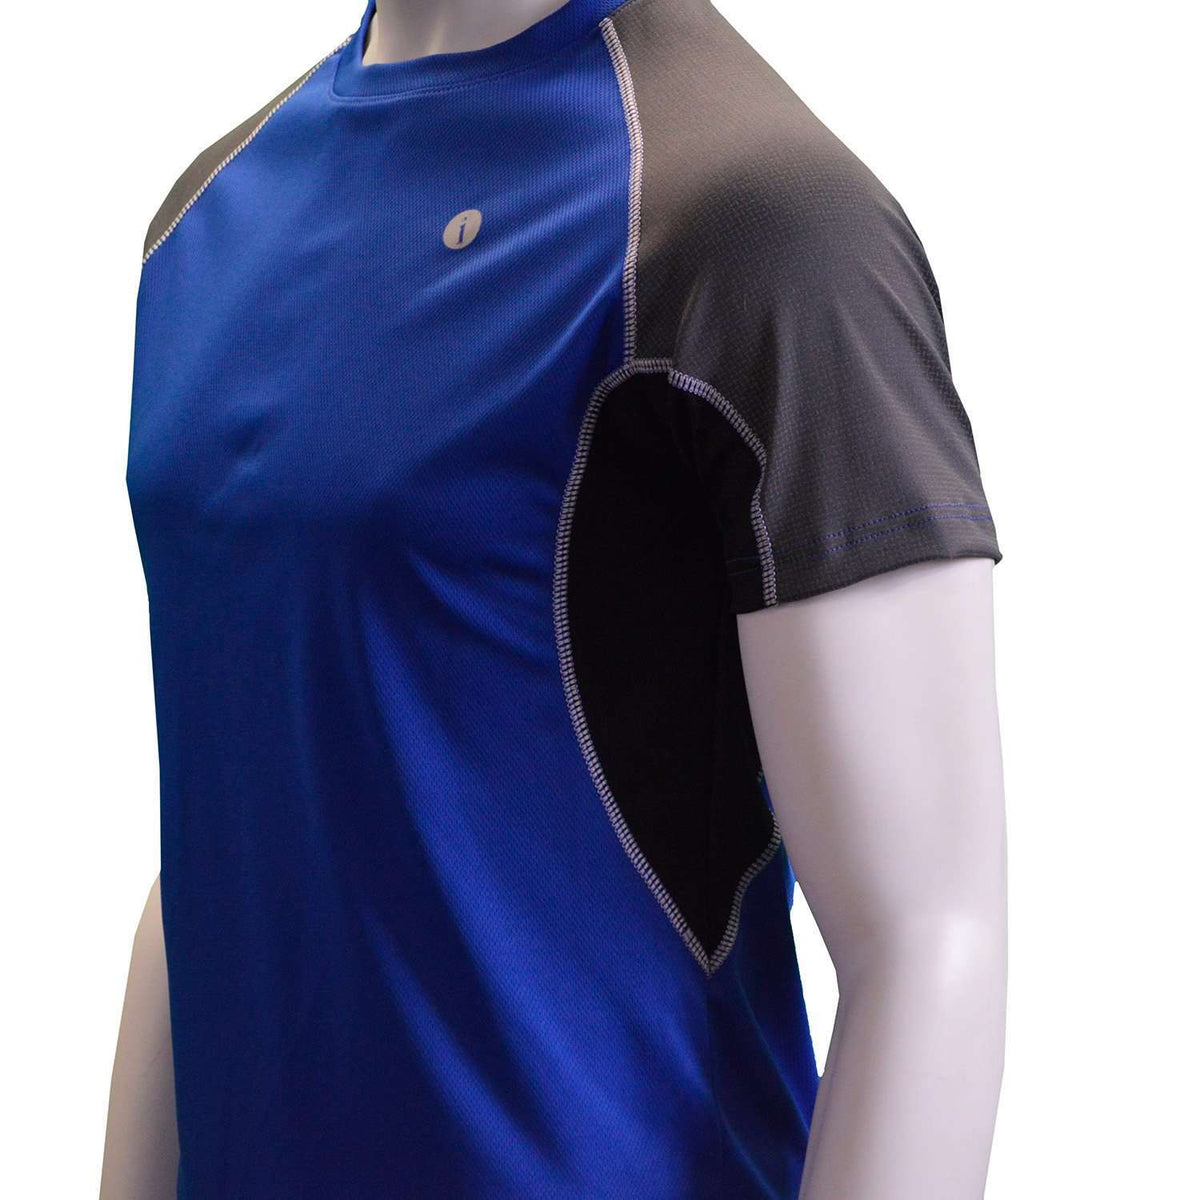 Sentinel Reflective Men's Short Sleeve Shirt in Cobalt/Graphite